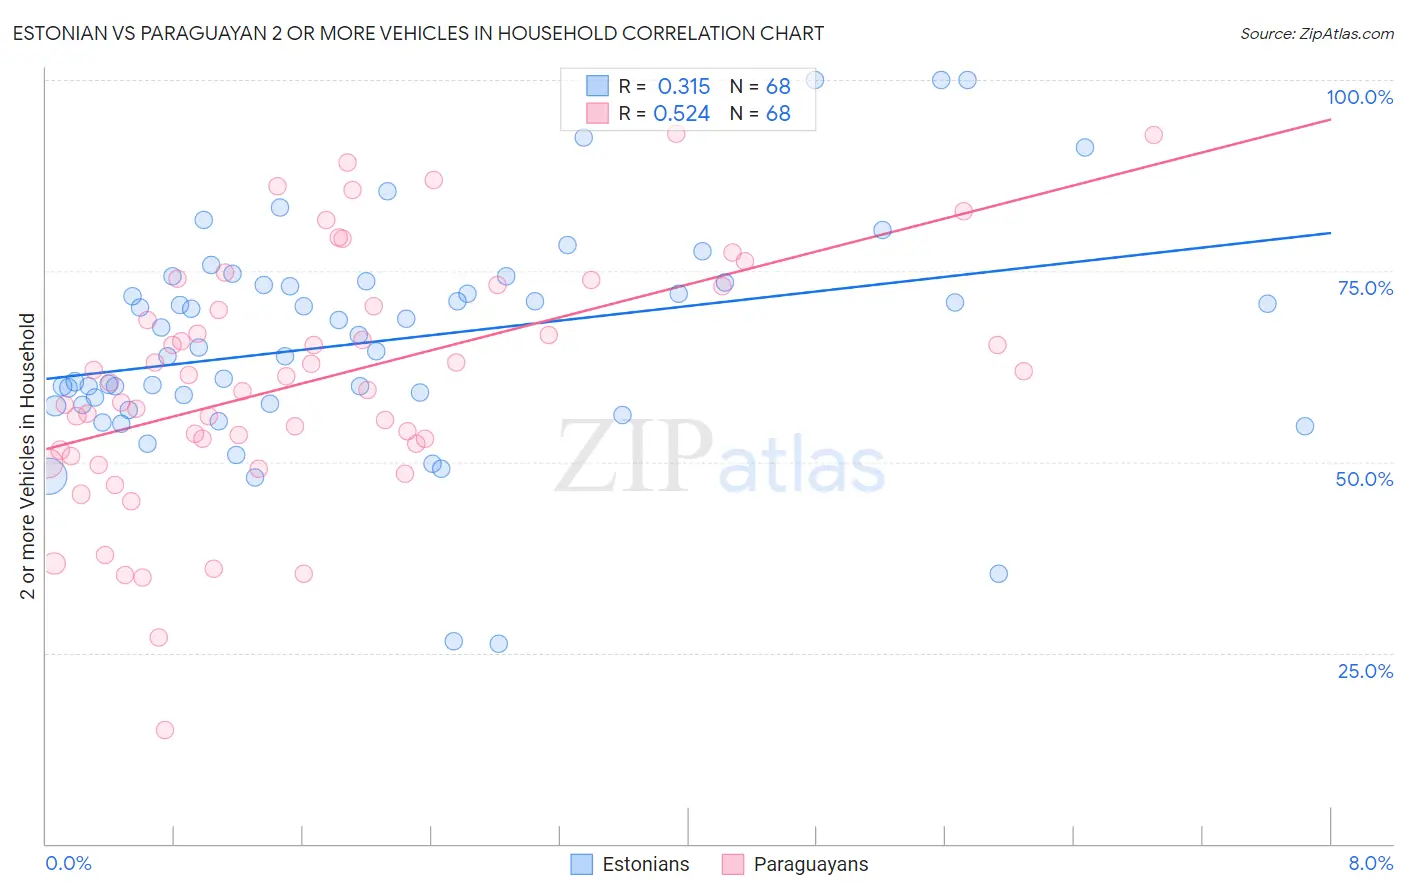 Estonian vs Paraguayan 2 or more Vehicles in Household